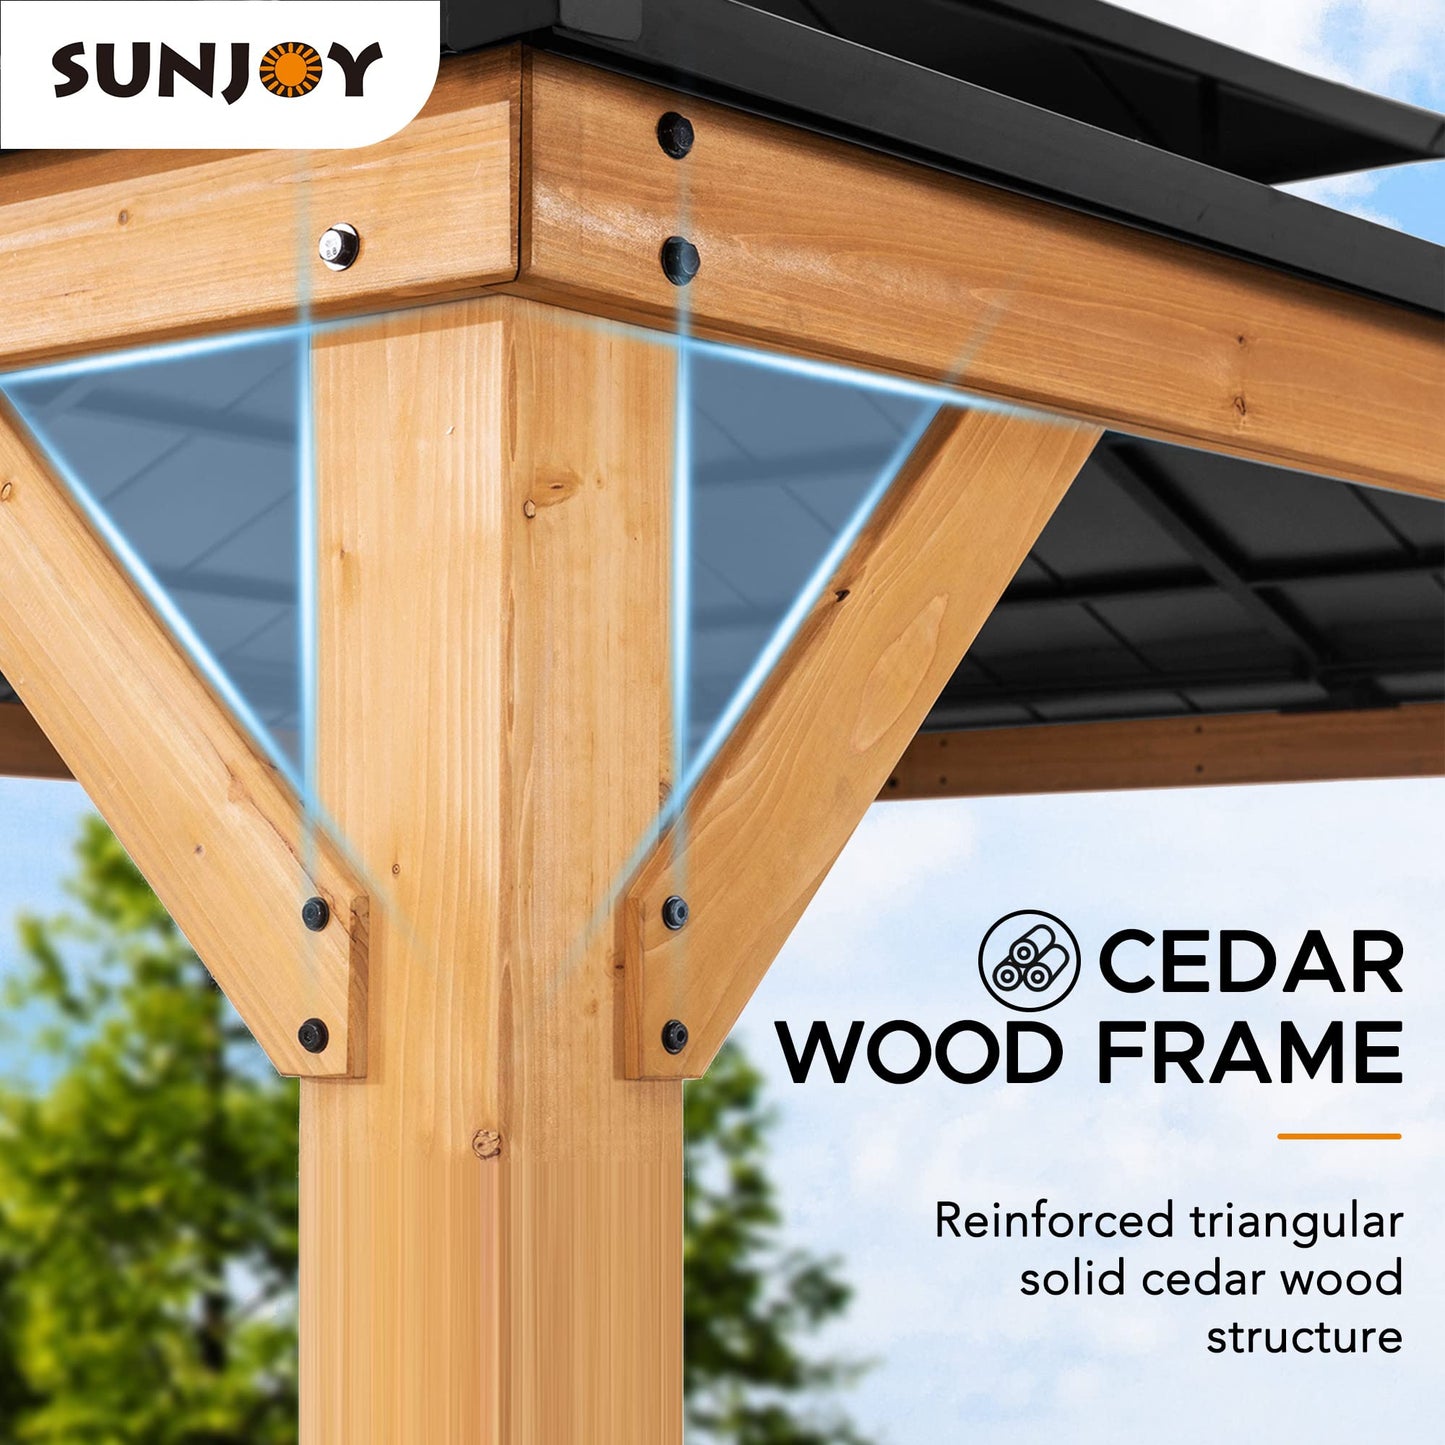 Sunjoy 11 x 13 ft. Wood Gazebo Cedar Framed Gaezbos with Black Double Steel Hardtop Roof for Garden, Backyard Shade, Matte Black Roof + Natural Wood Frame